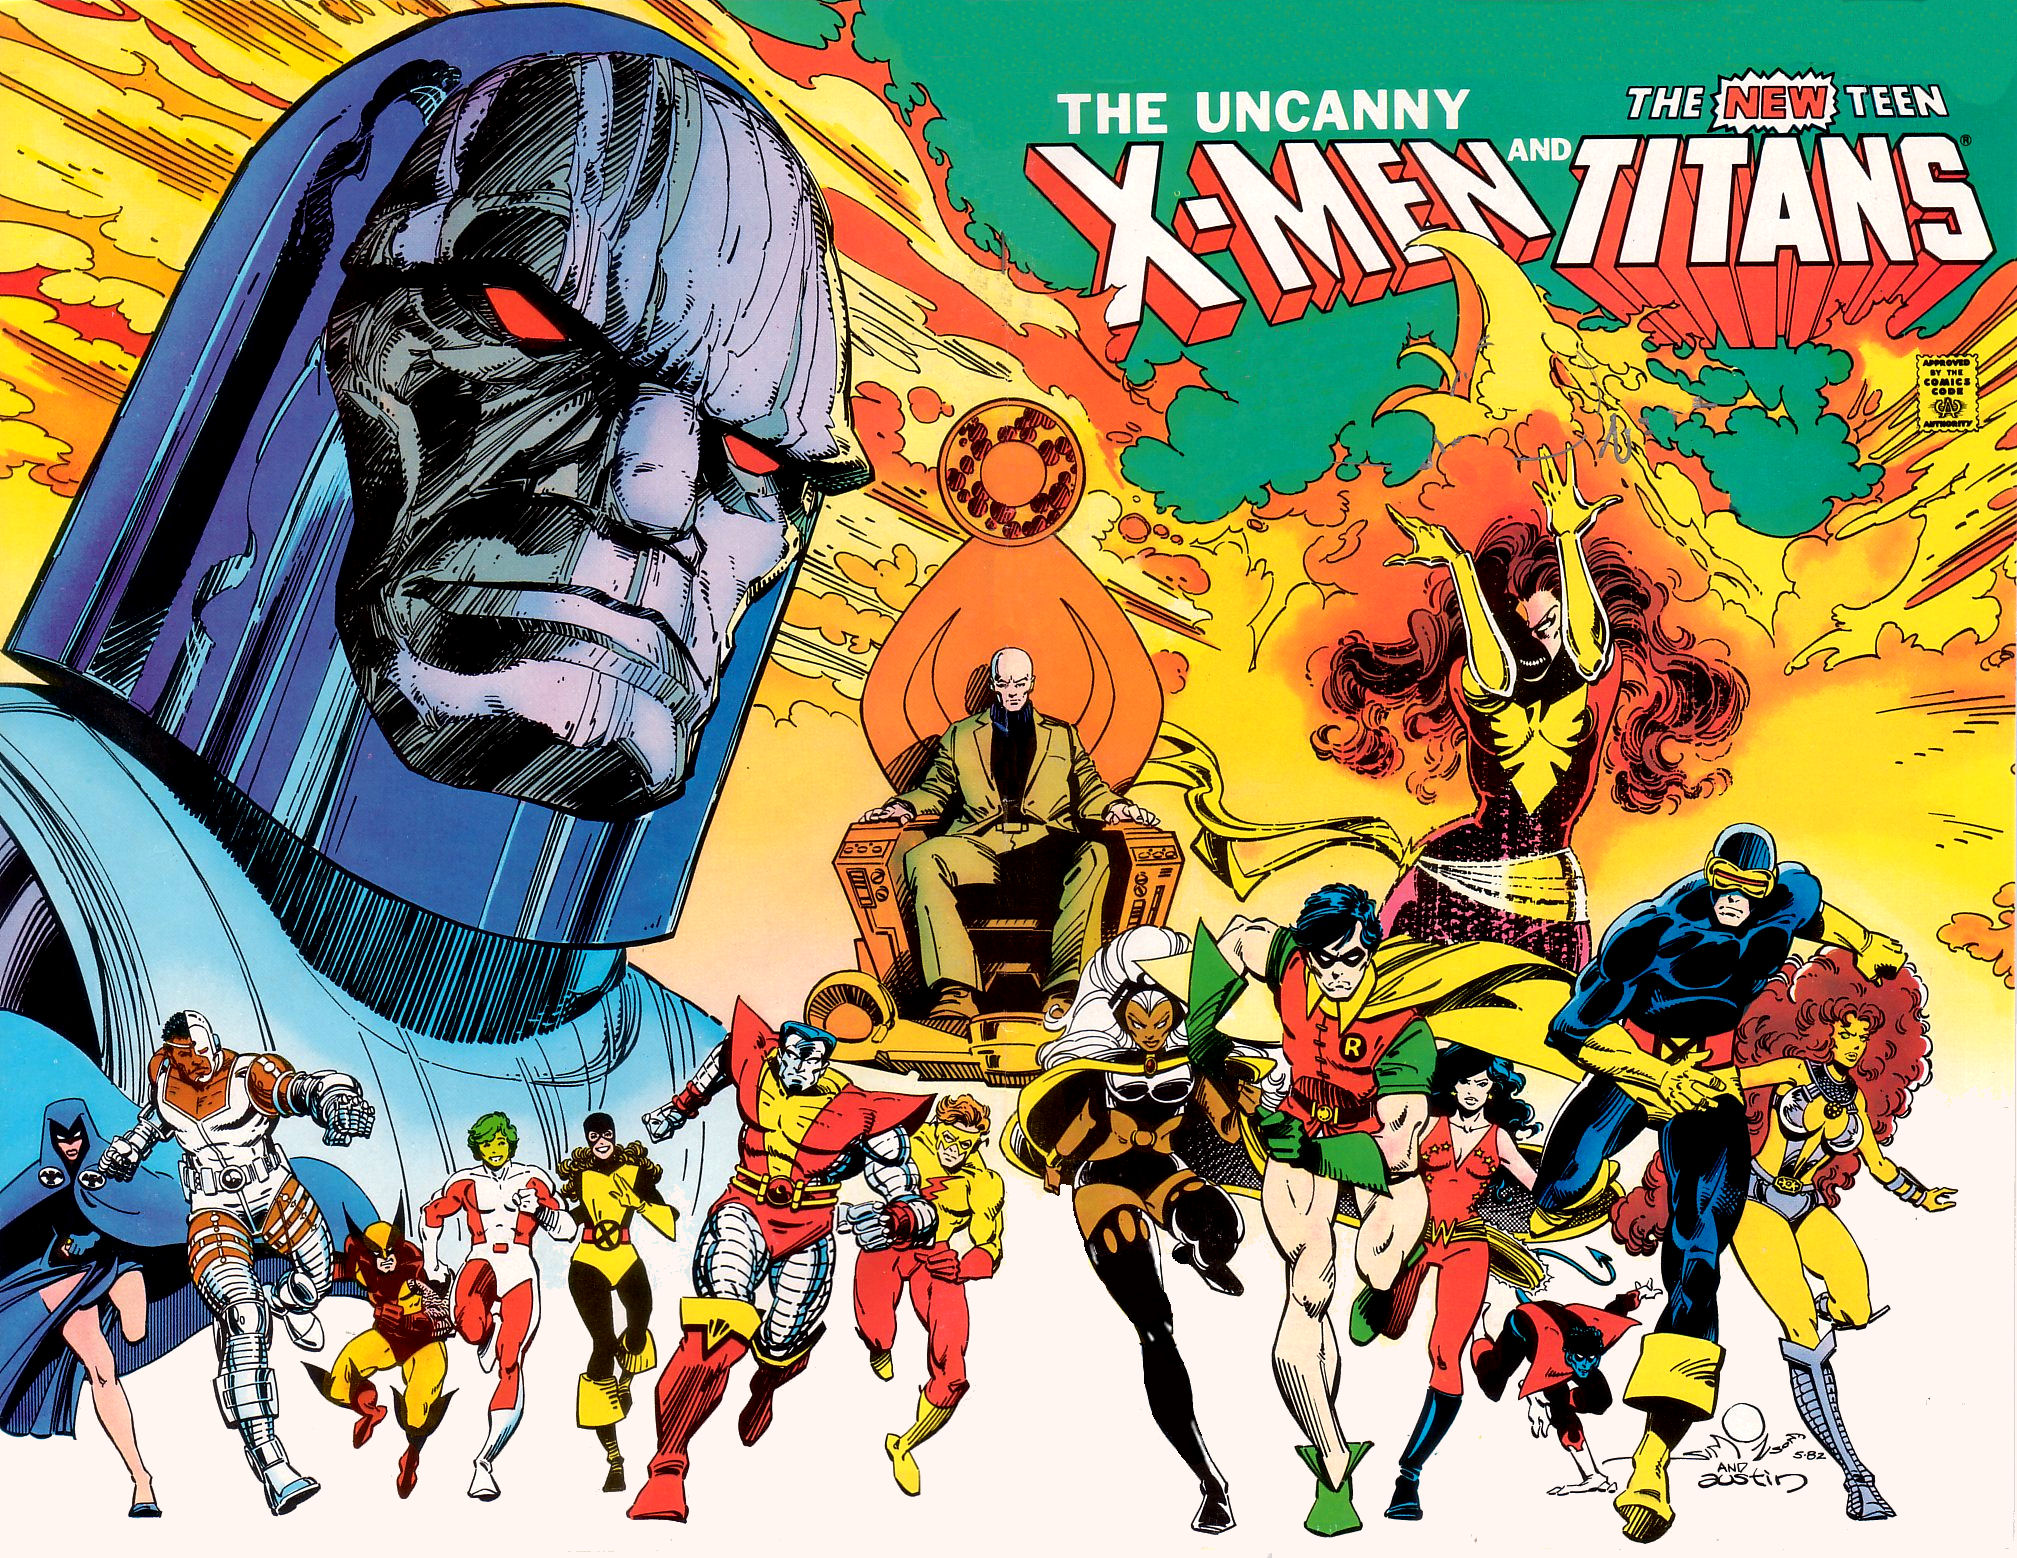 the uncanny x men and the new teen titans, comics, beast boy, charles xavier, colossus, cyborg (dc comics), cyclops (marvel comics), dark phoenix, darkseid (dc comics), dc comics, donna troy, garfield logan, jean grey, kid flash, kitty pryde, nightcrawler (marvel comics), phoenix (marvel comics), professor x, robin (dc comics), starfire (dc comics), storm (marvel comics), teen titans, uncanny x men, wally west, wolverine, wonder girl 1080p